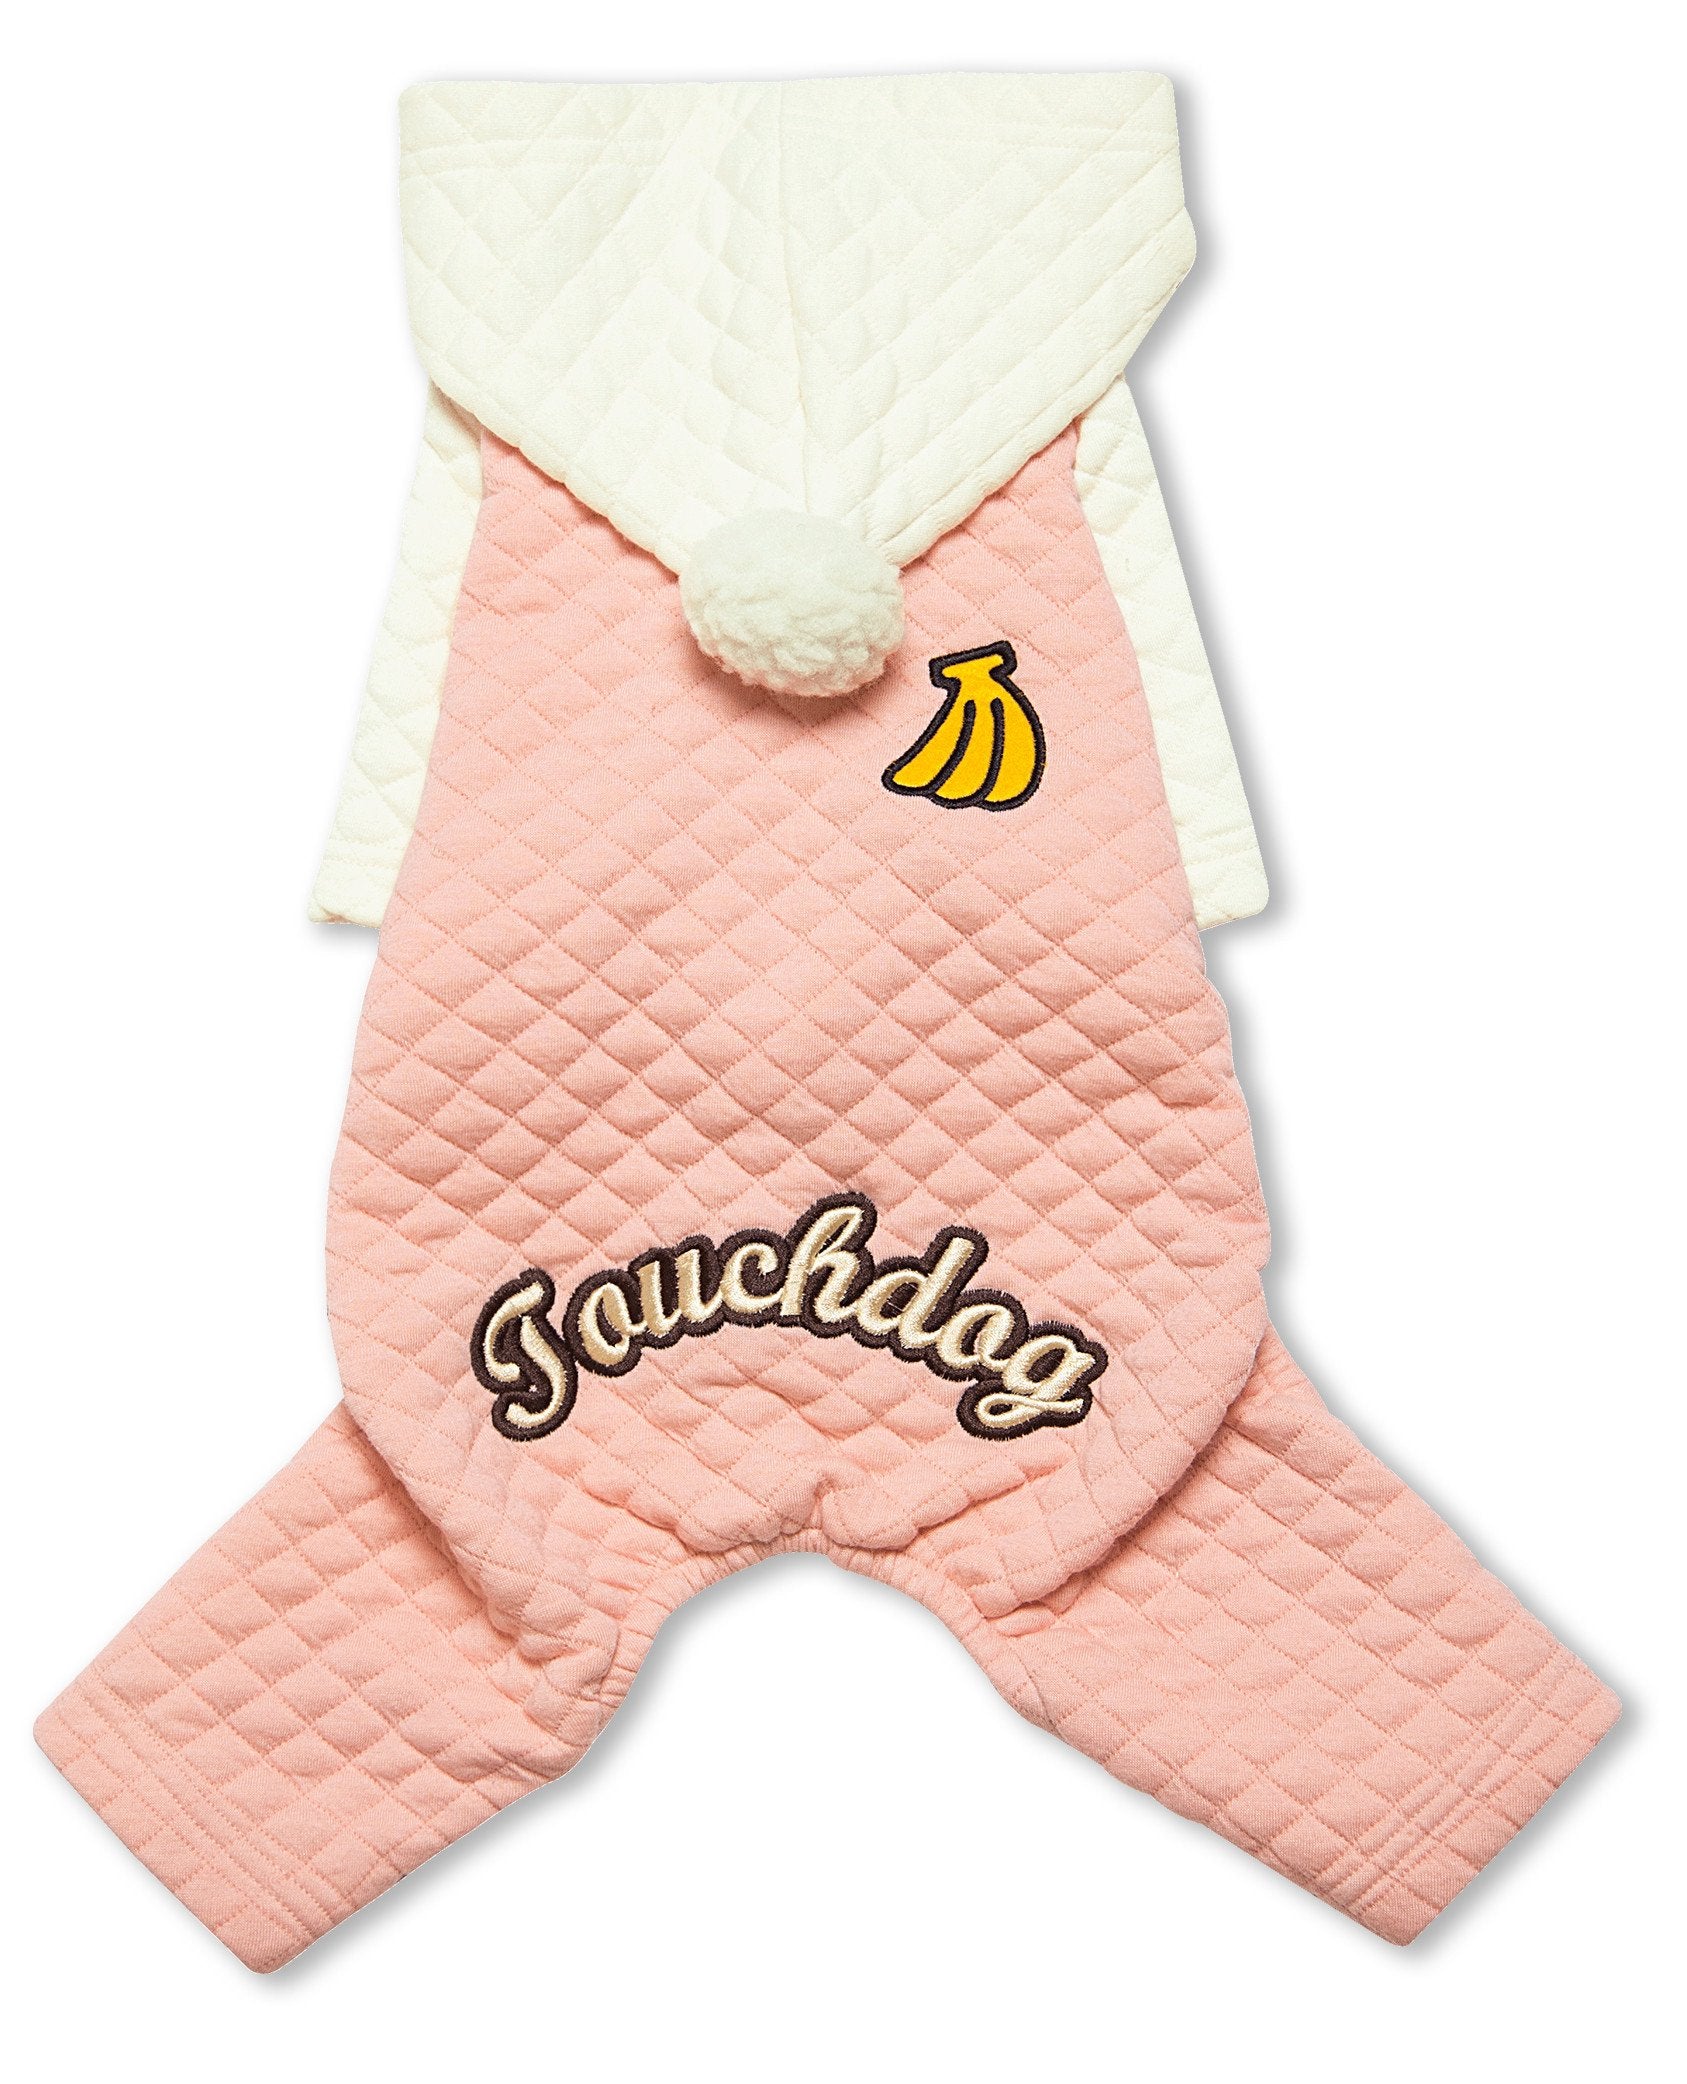 Touchdog Fashion Designer Dog Hooded Sweater - Pink/White - Small